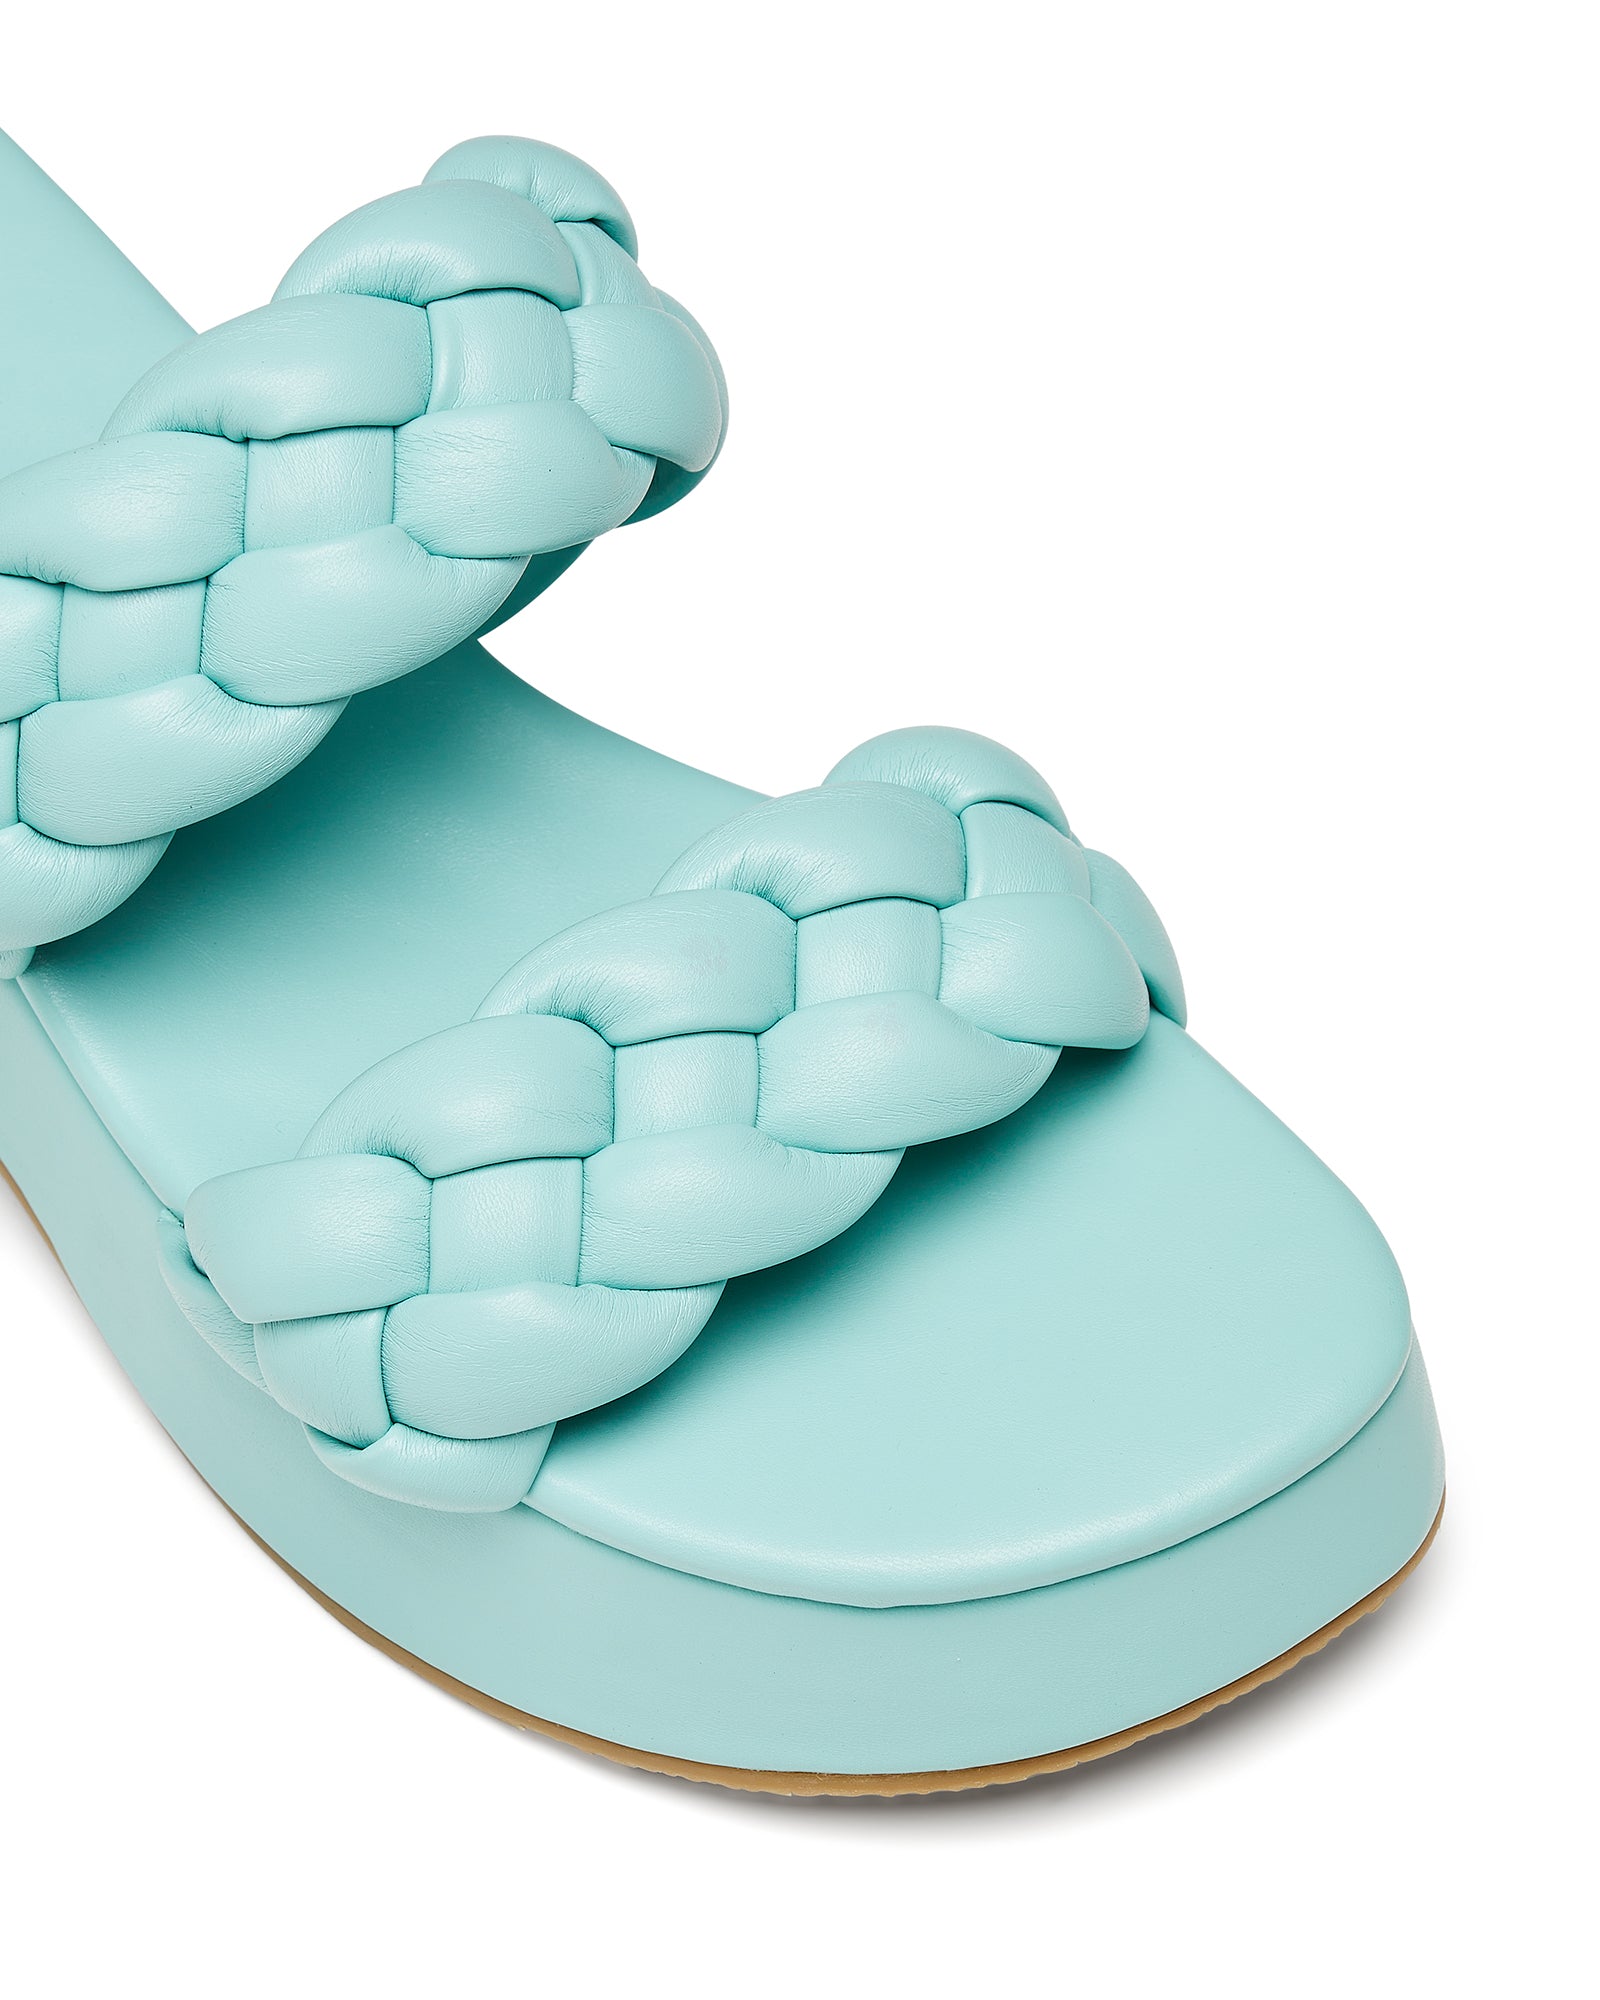 Therapy Shoes Christy Seafoam | Women's Sandals | Slides | Platform | Woven